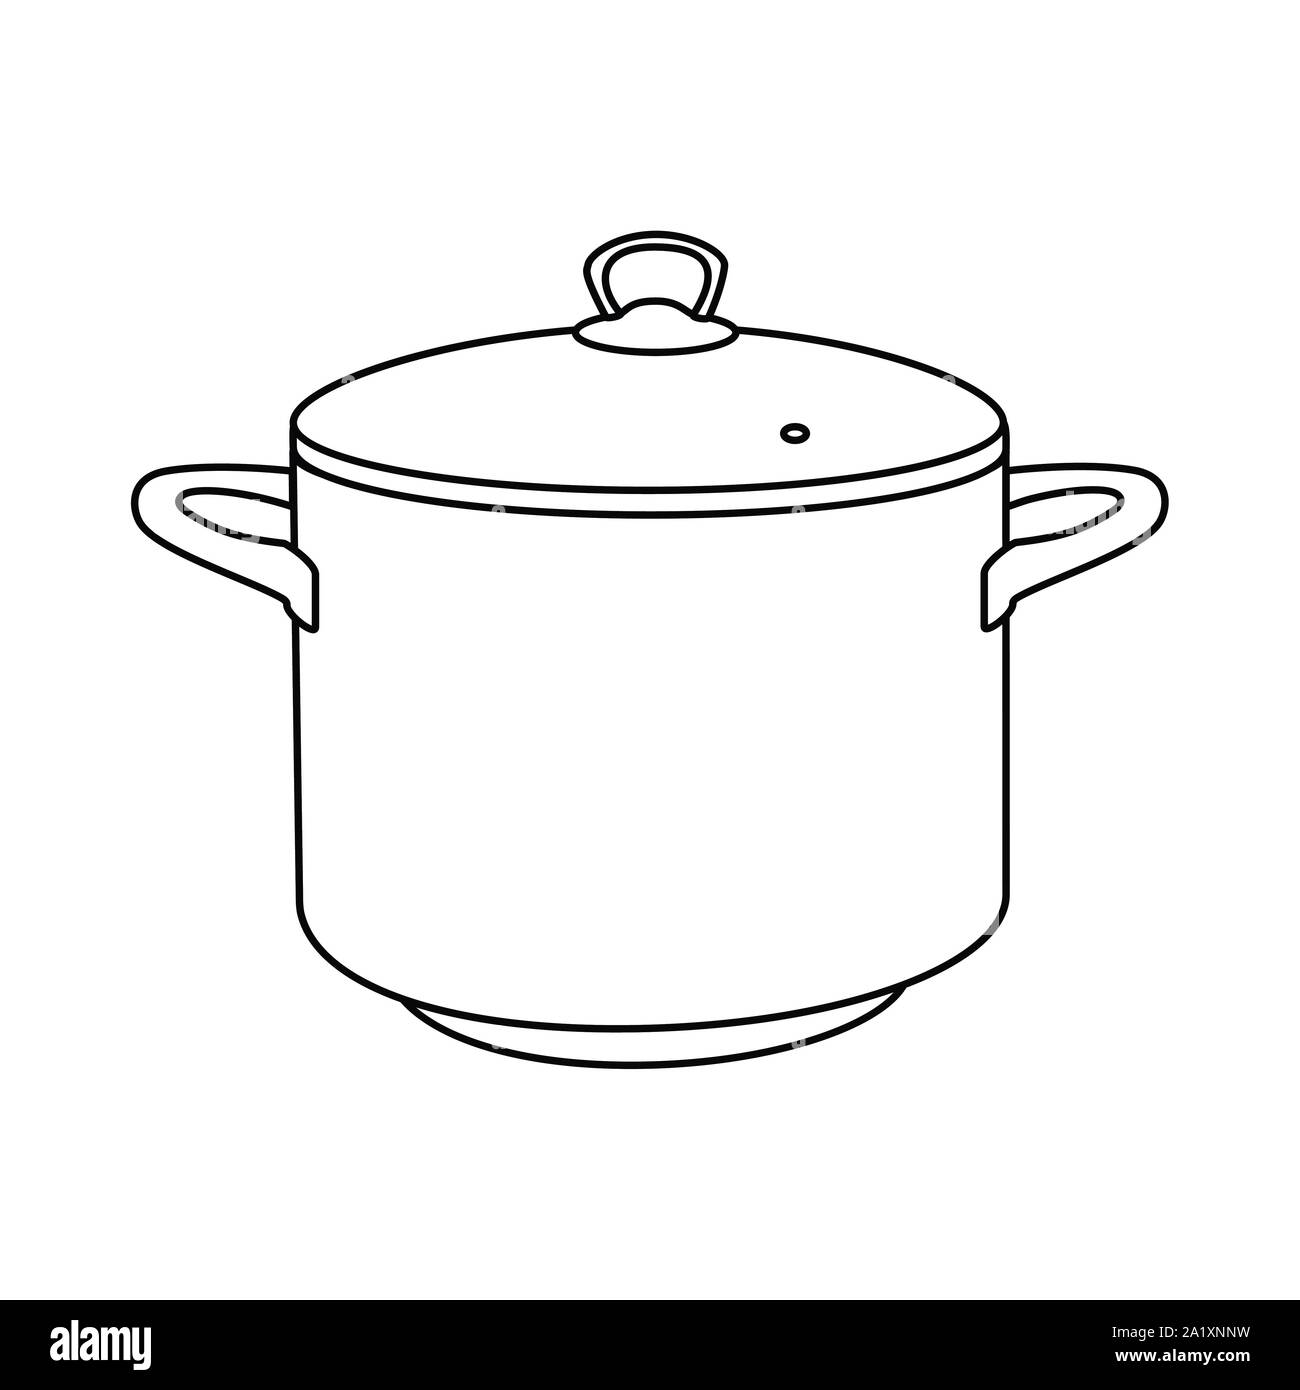 Cooking Pots Dimensions & Drawings | Dimensions.com